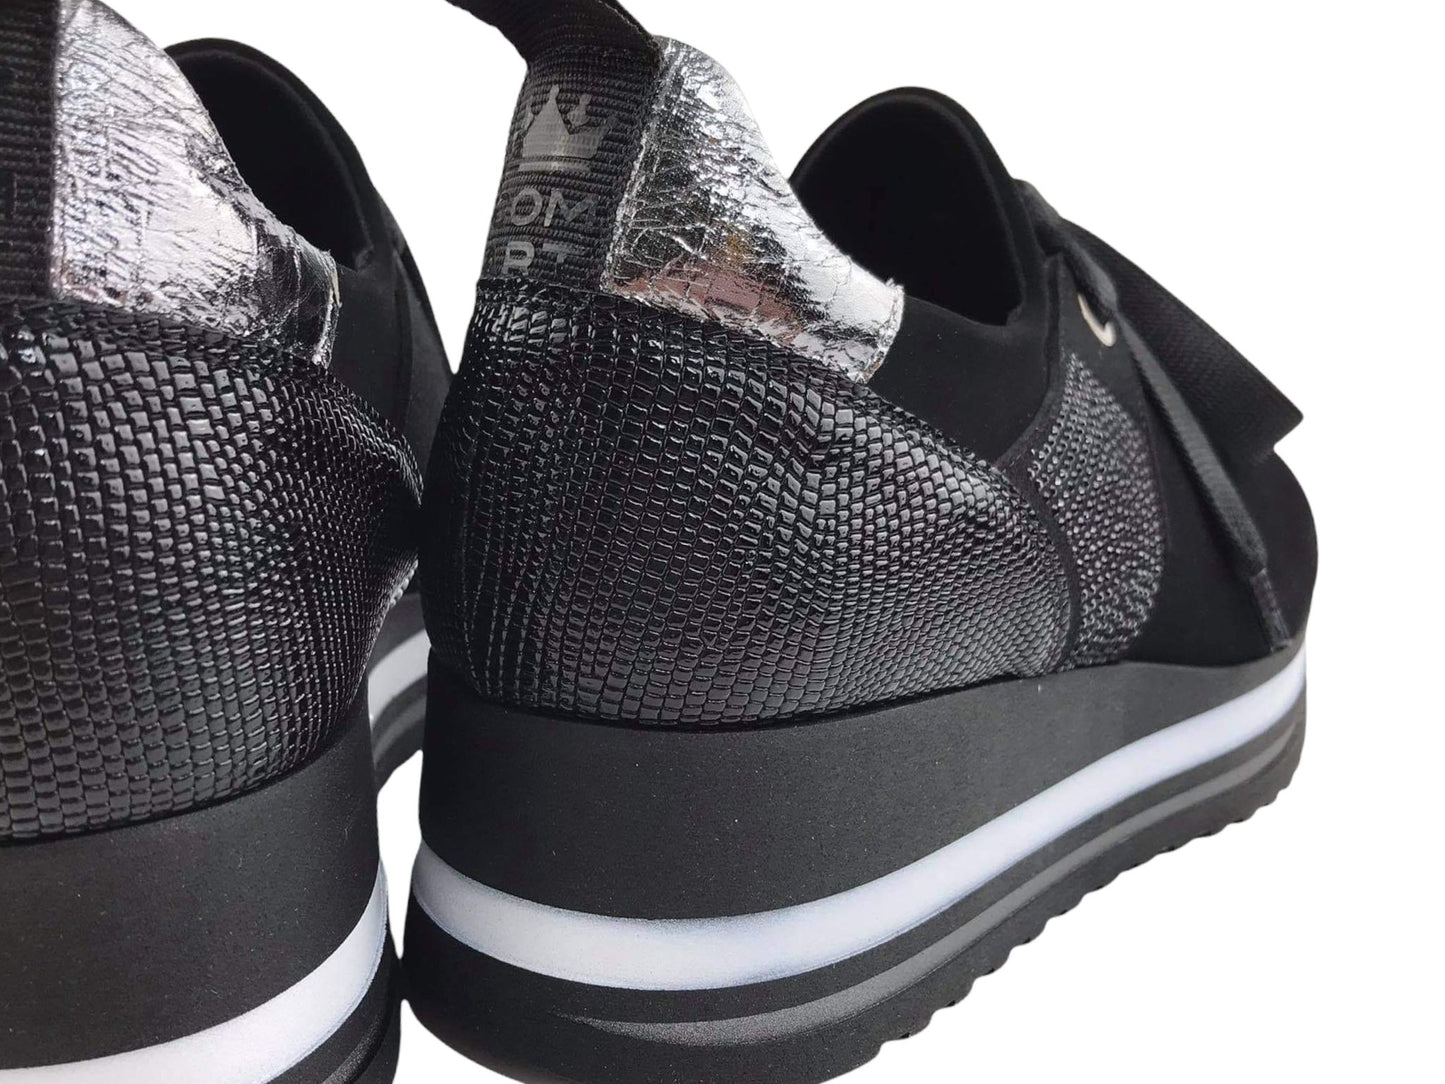 Comart | Zapatos sneakers negros Nobuck de mujer con lazo Milano